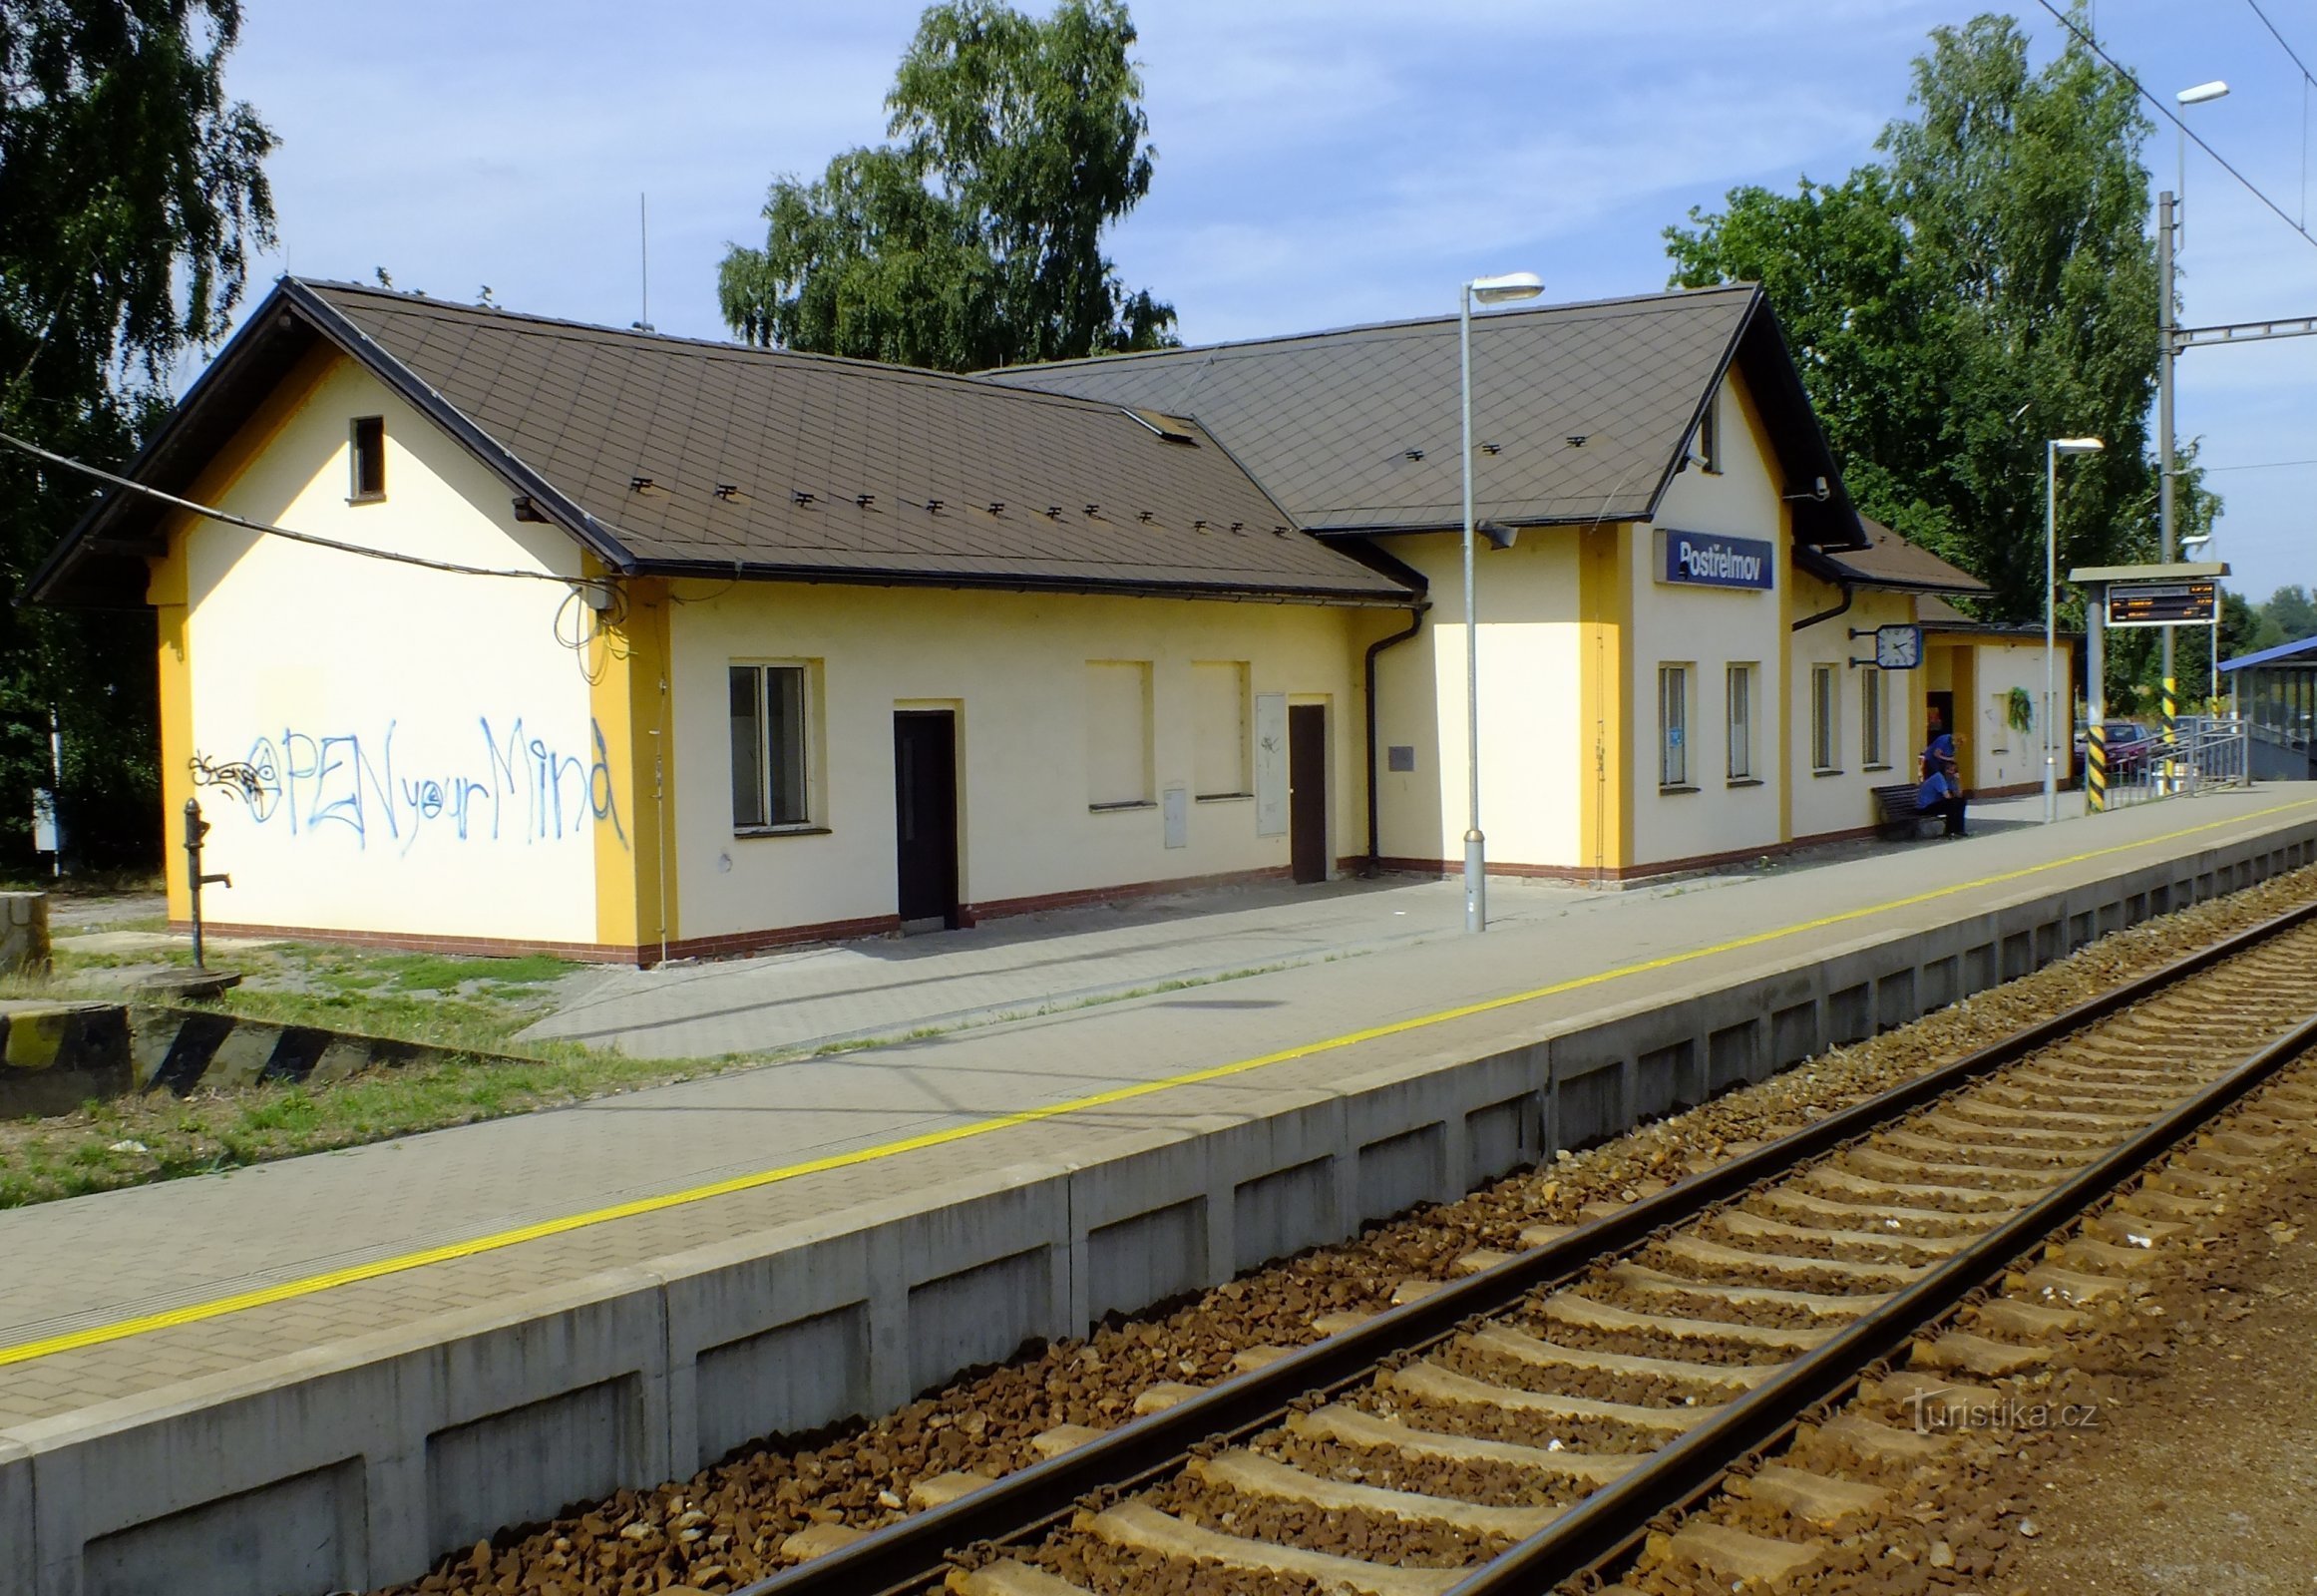 station building